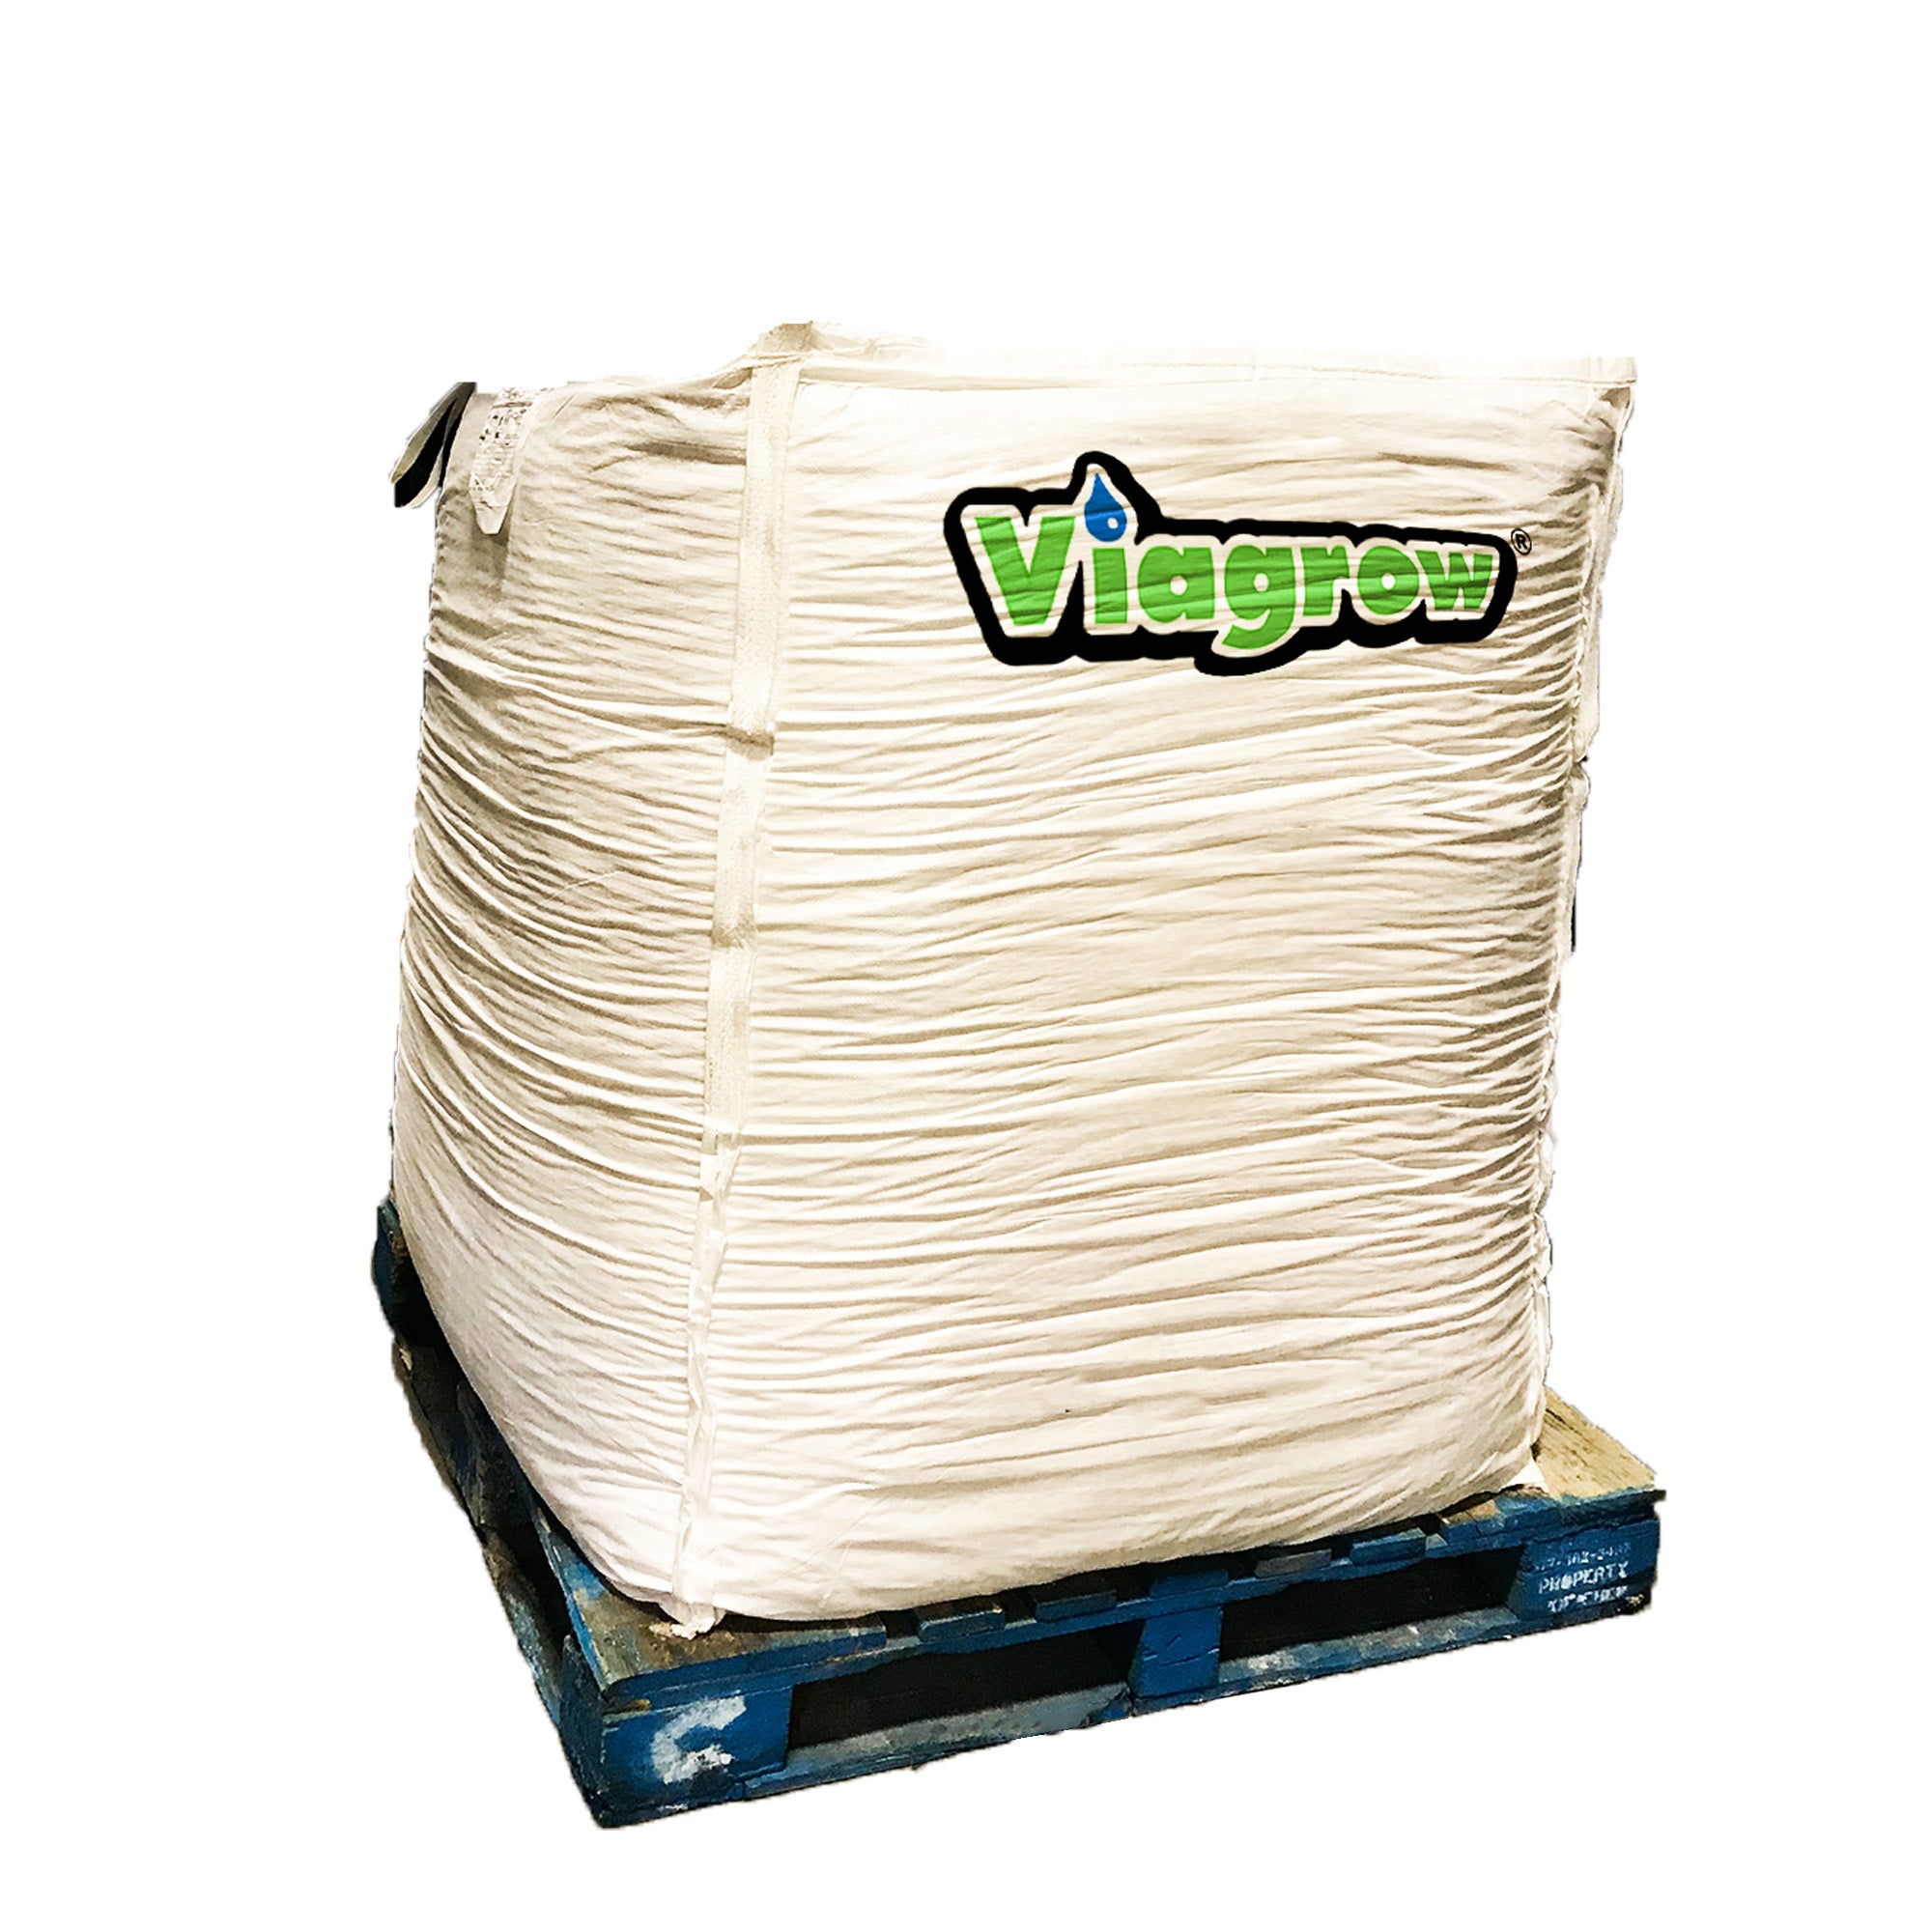 Viagrow Premium Coco Coir Loose, 50 Cubic Feet / 1 Tote,